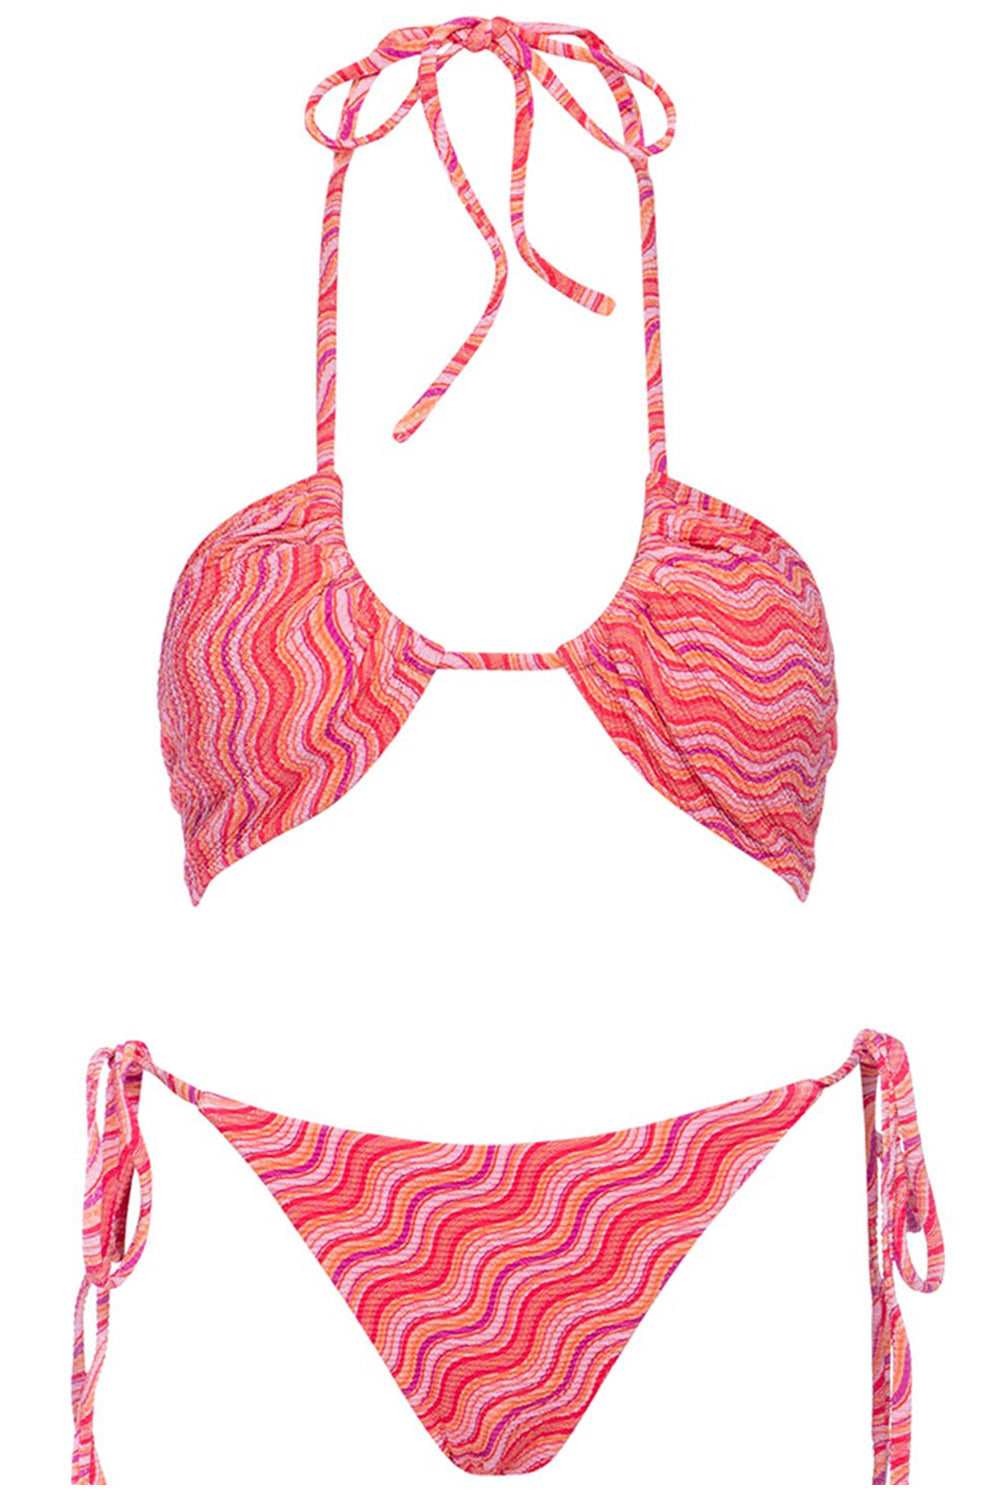 Triangle Bikini Wavy Set on white background front view.